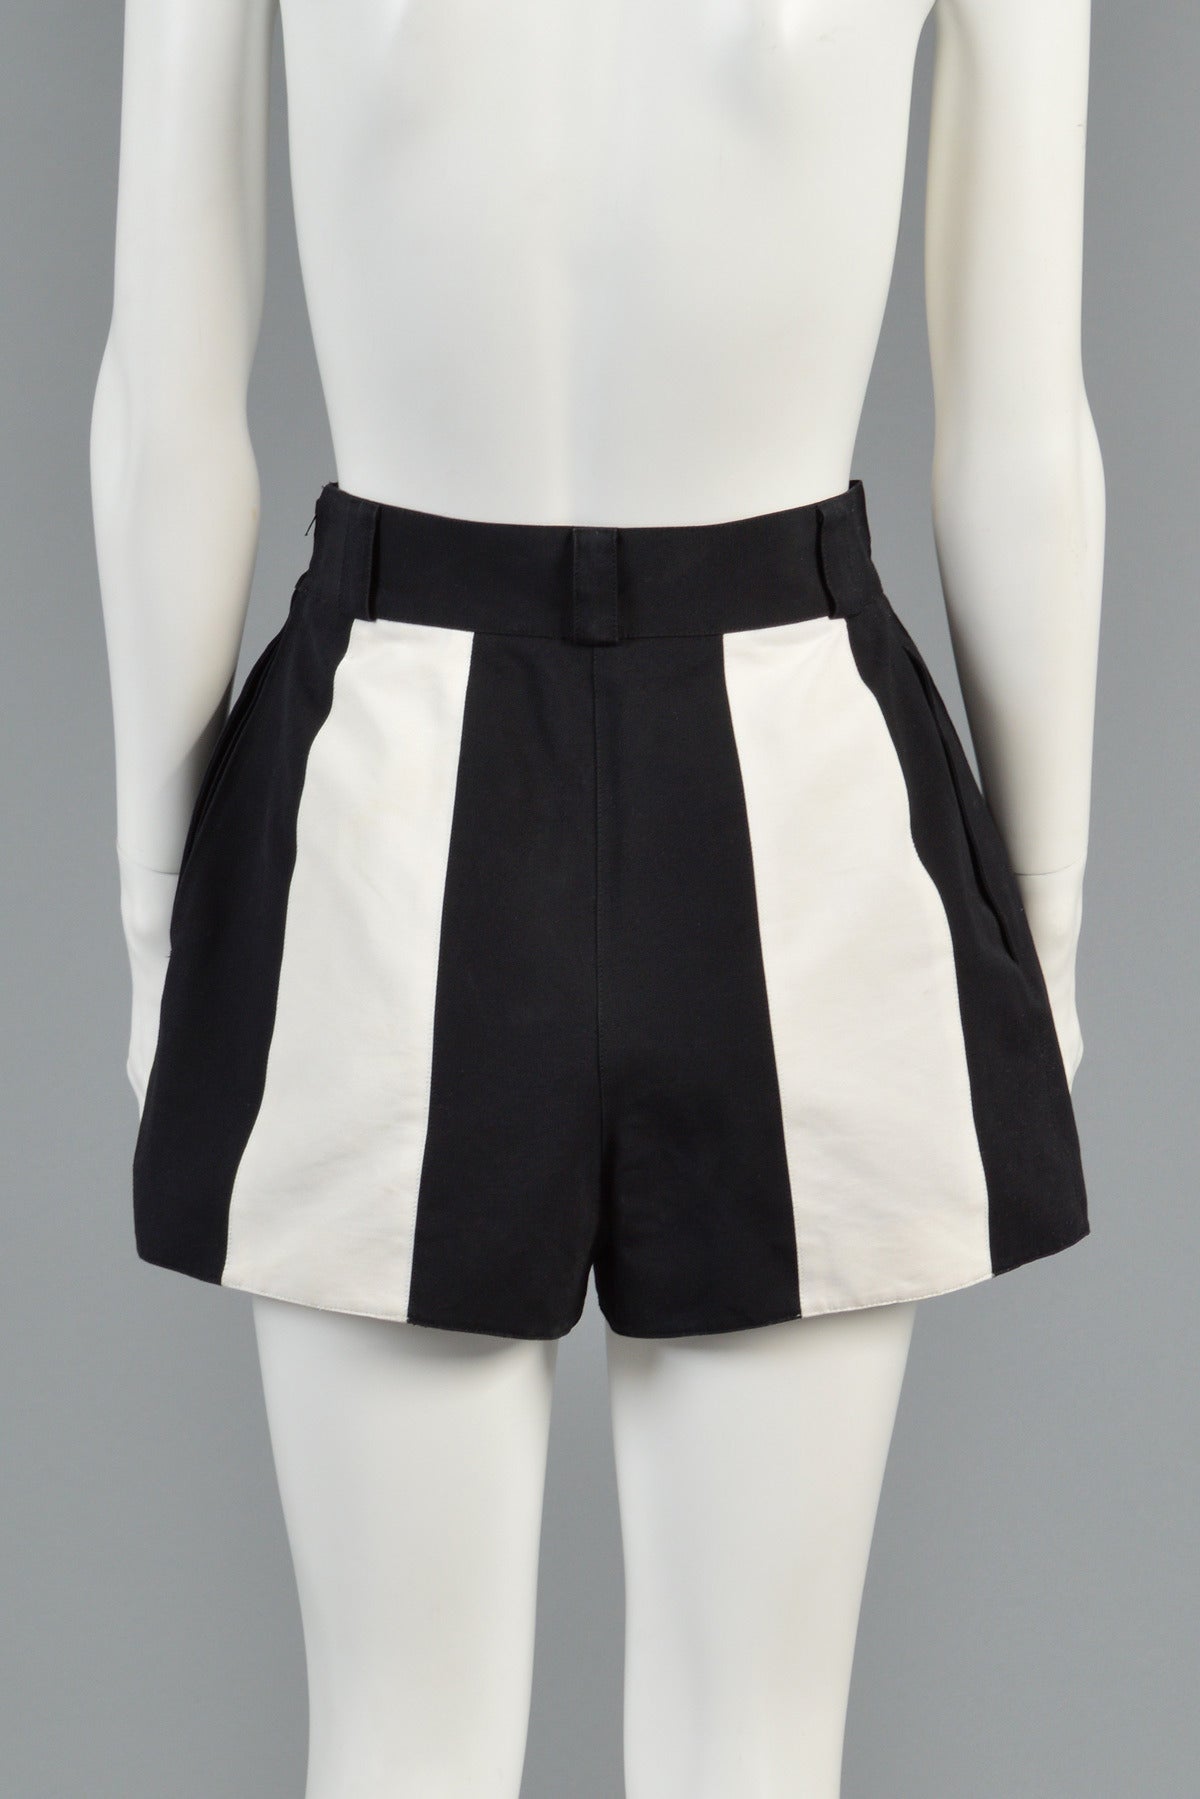 Claude Montana Black + White Colorblock Shorts For Sale 3